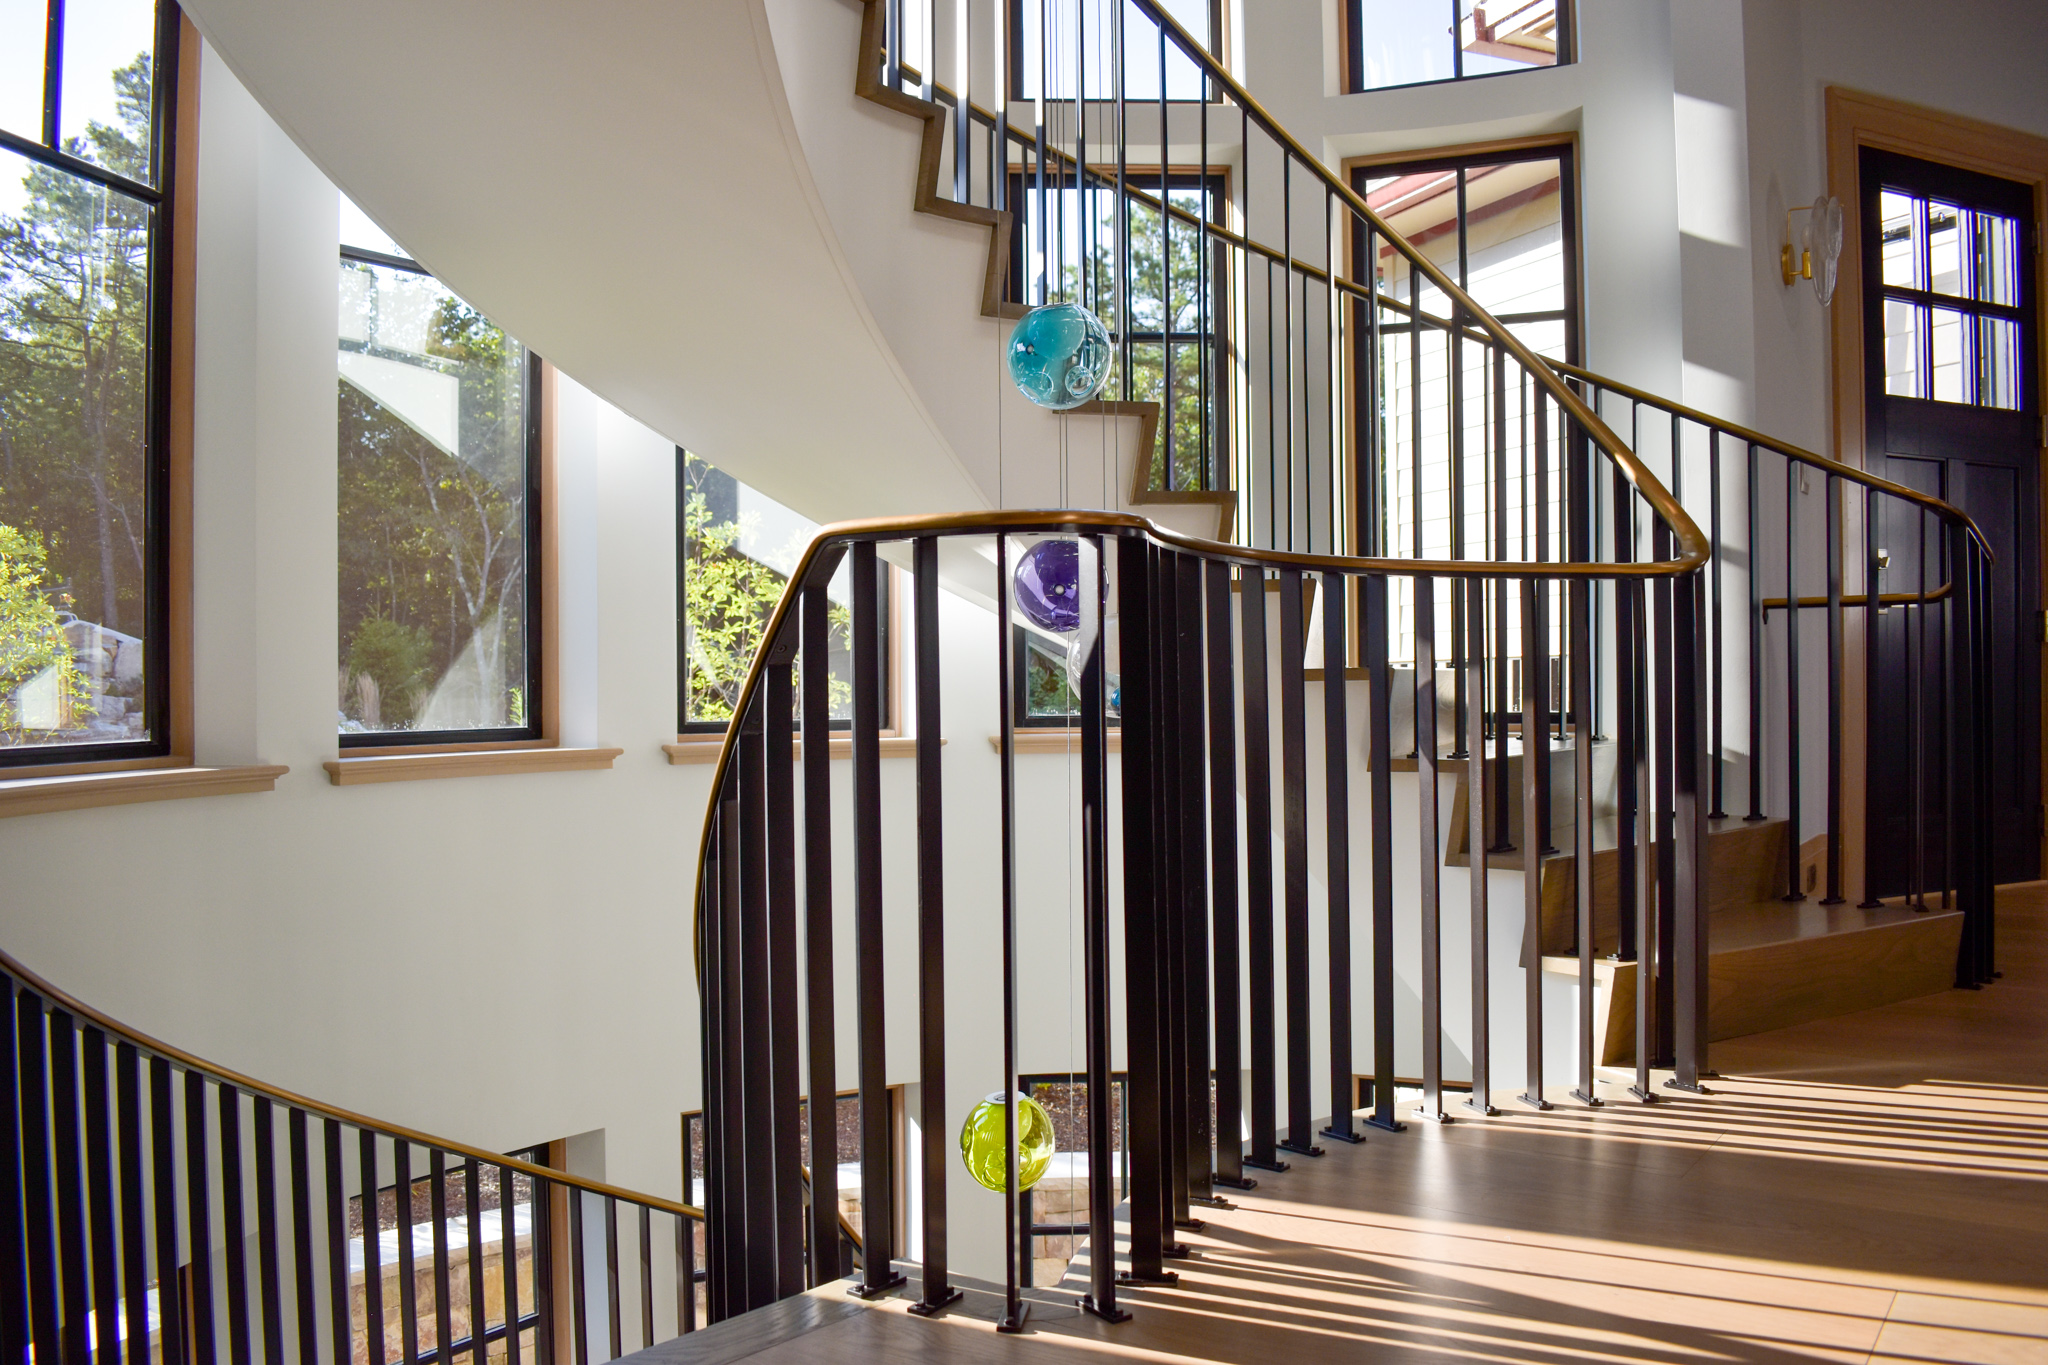 staircase handrail design